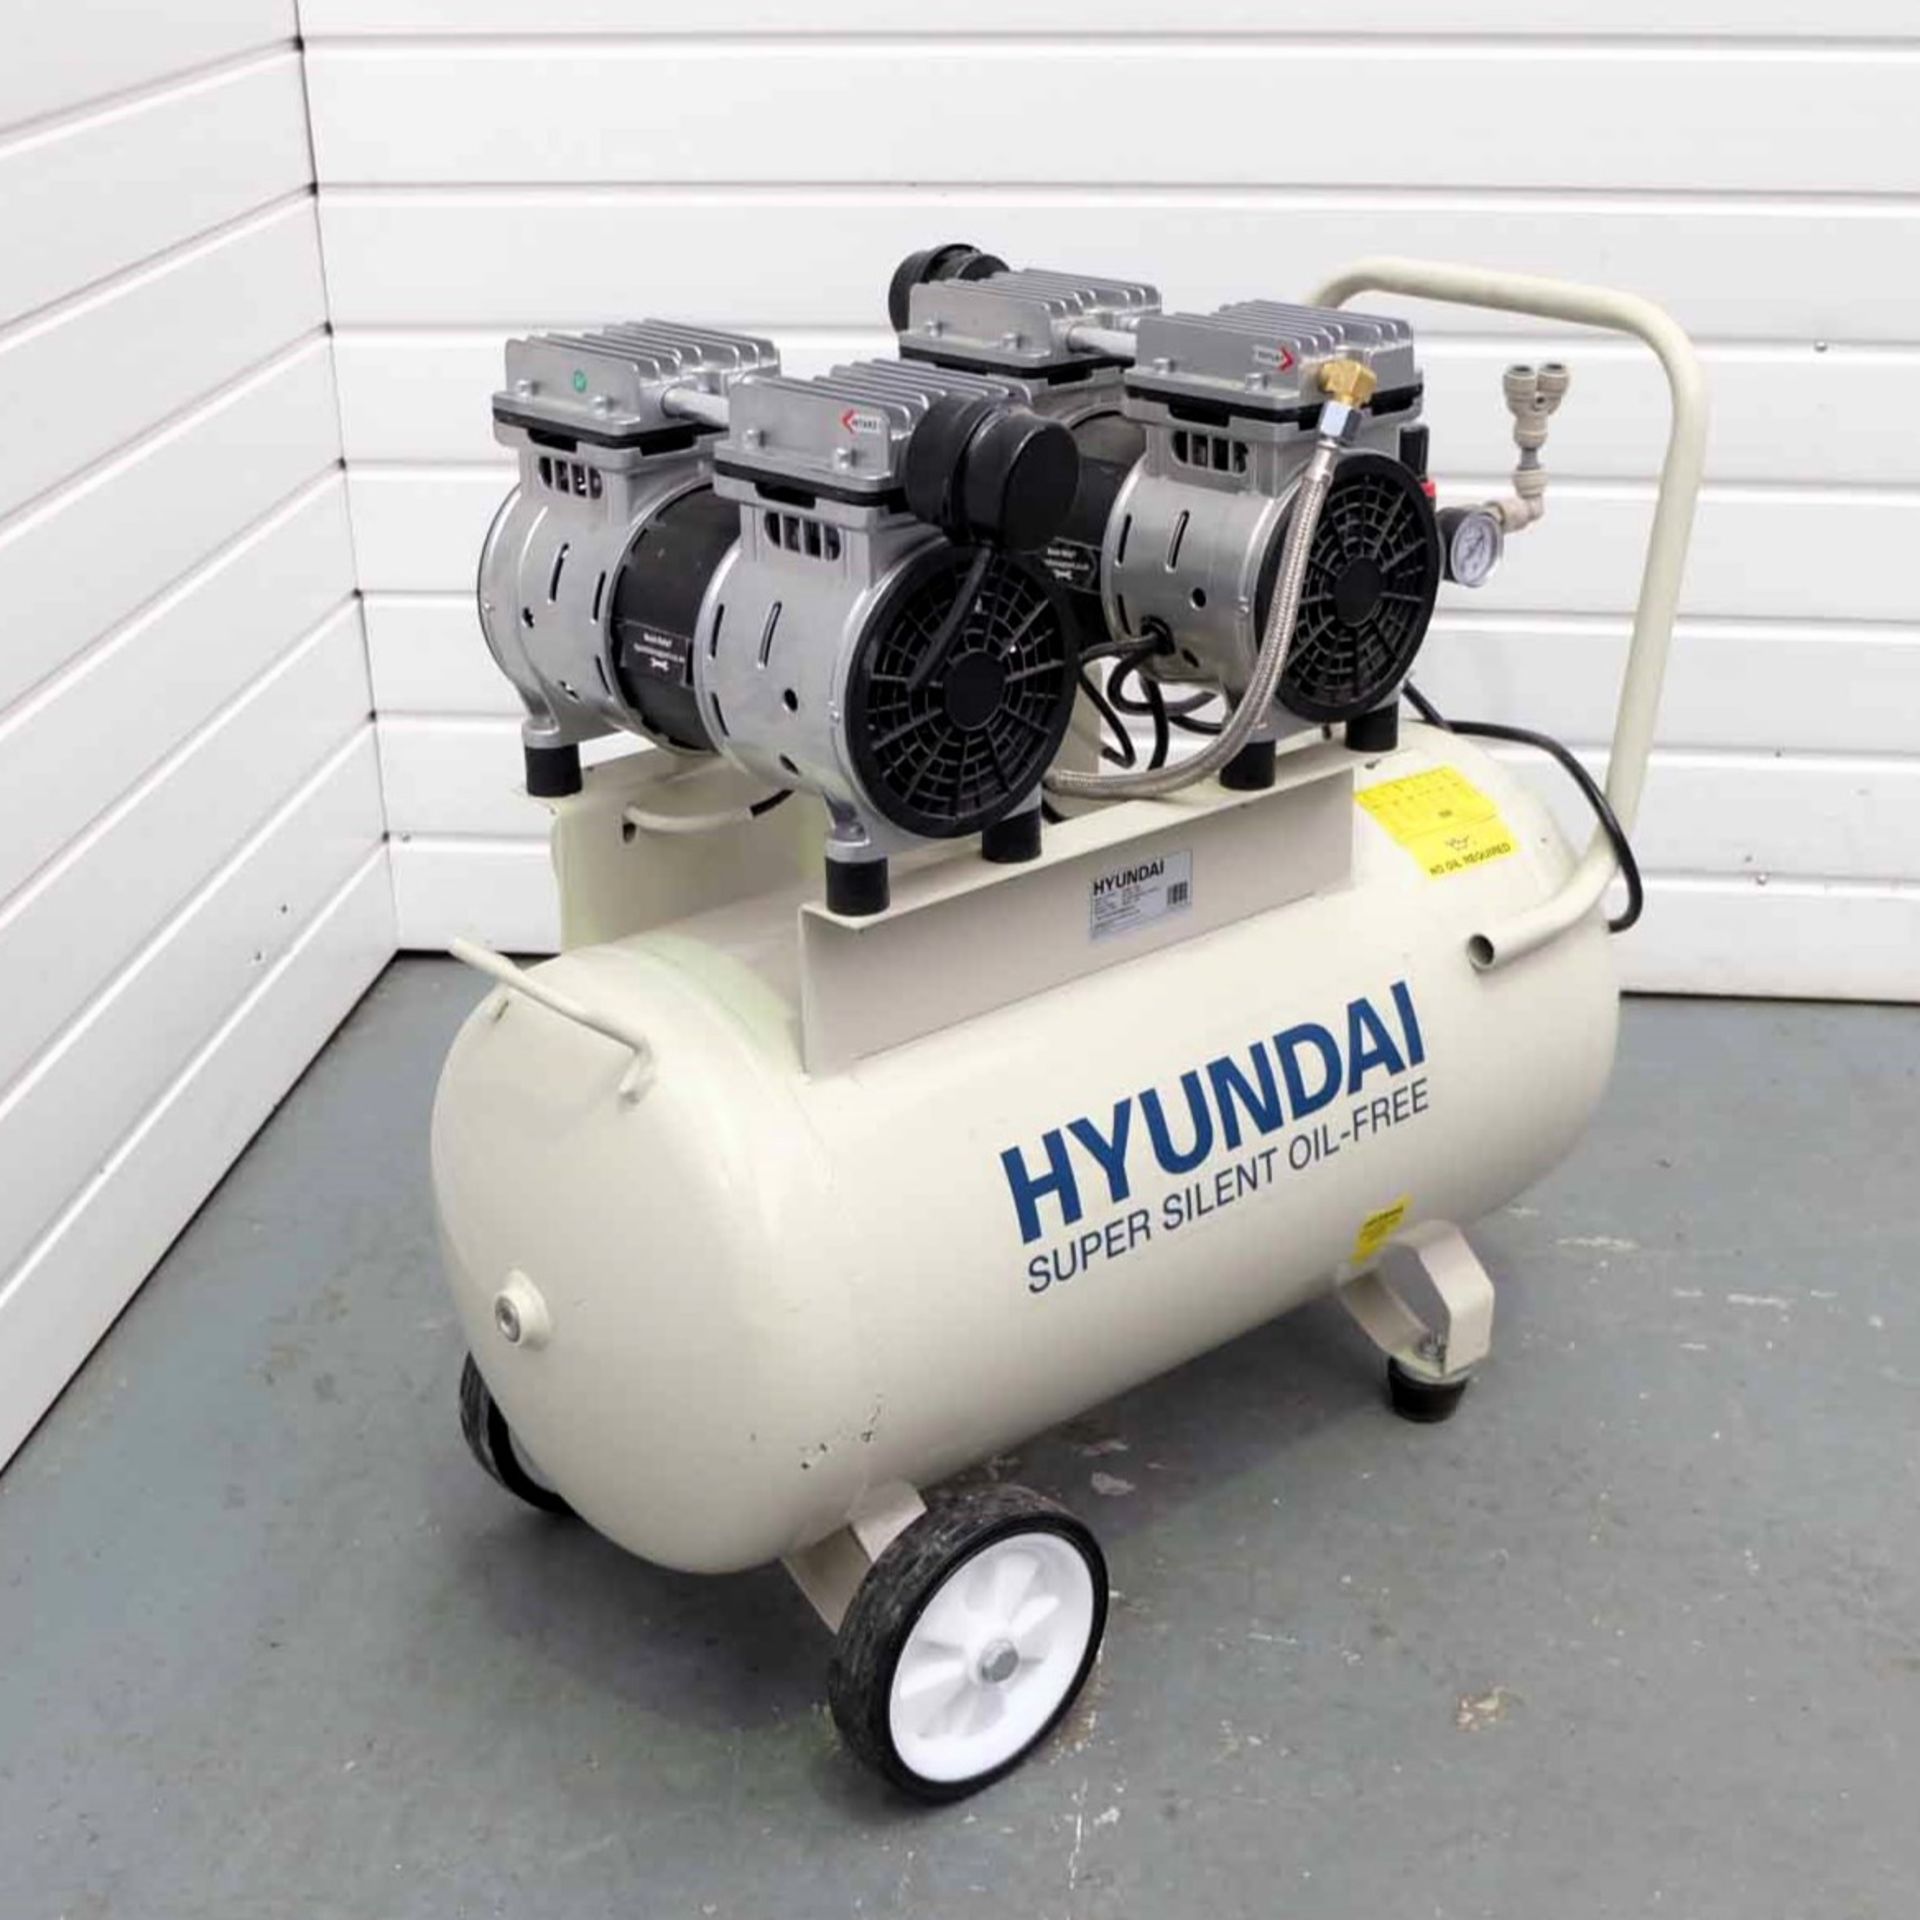 Hyundai Super Silent Oil Free Compressor. Model No HY27550. Tank Capacity 50 Litres. Pressure 7 Bar. - Image 2 of 7